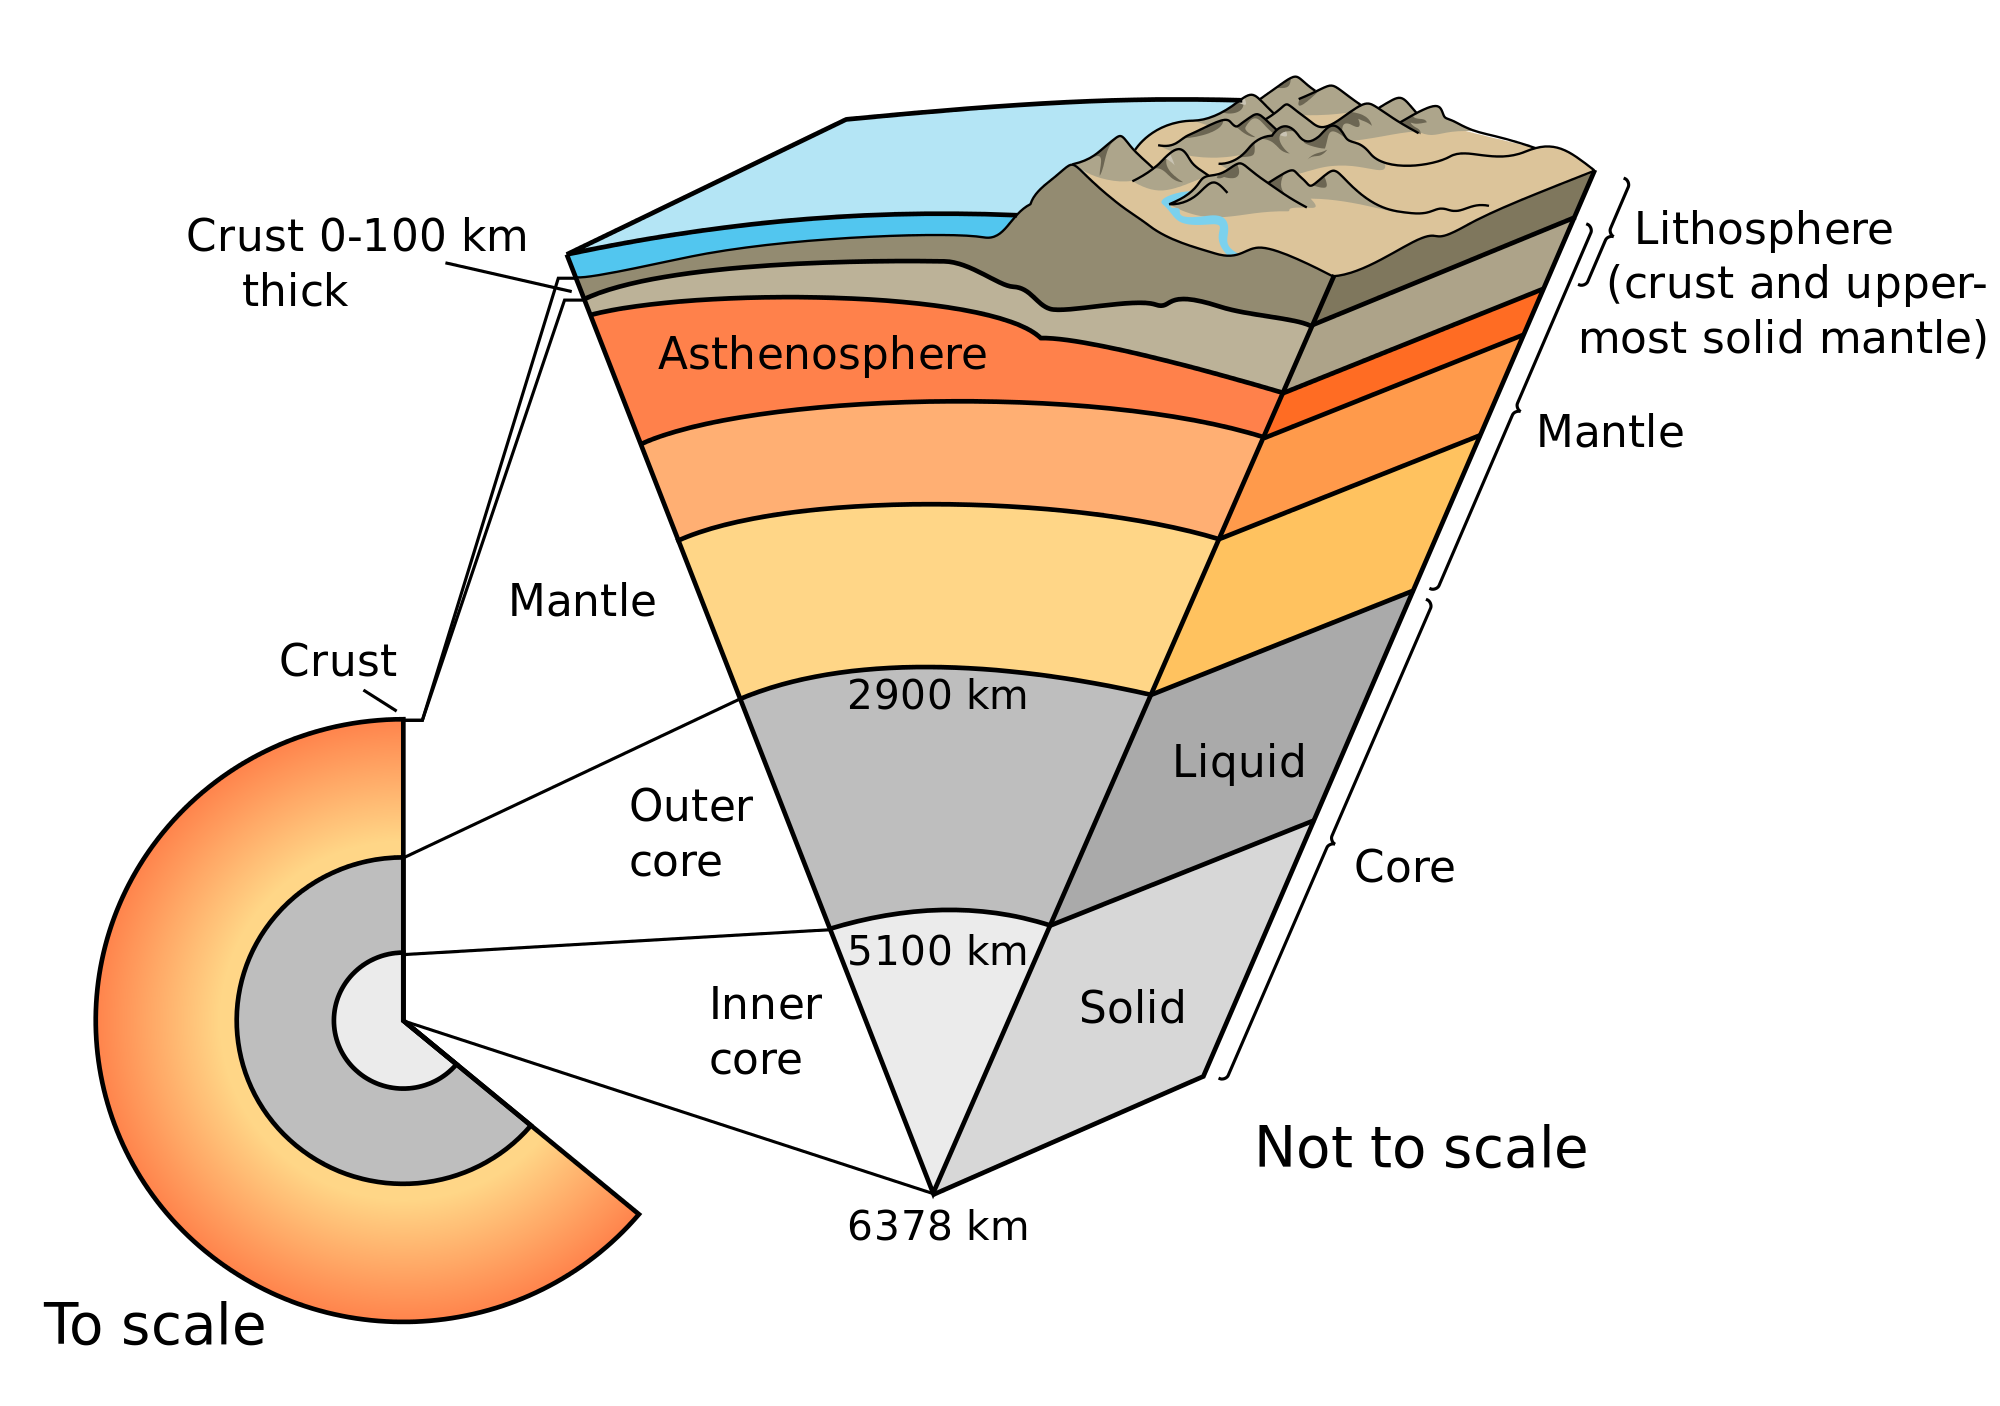 https://en.wikipedia.org/wiki/Lithosphere#/media/File:Earth-cutaway-schematic-english.svg